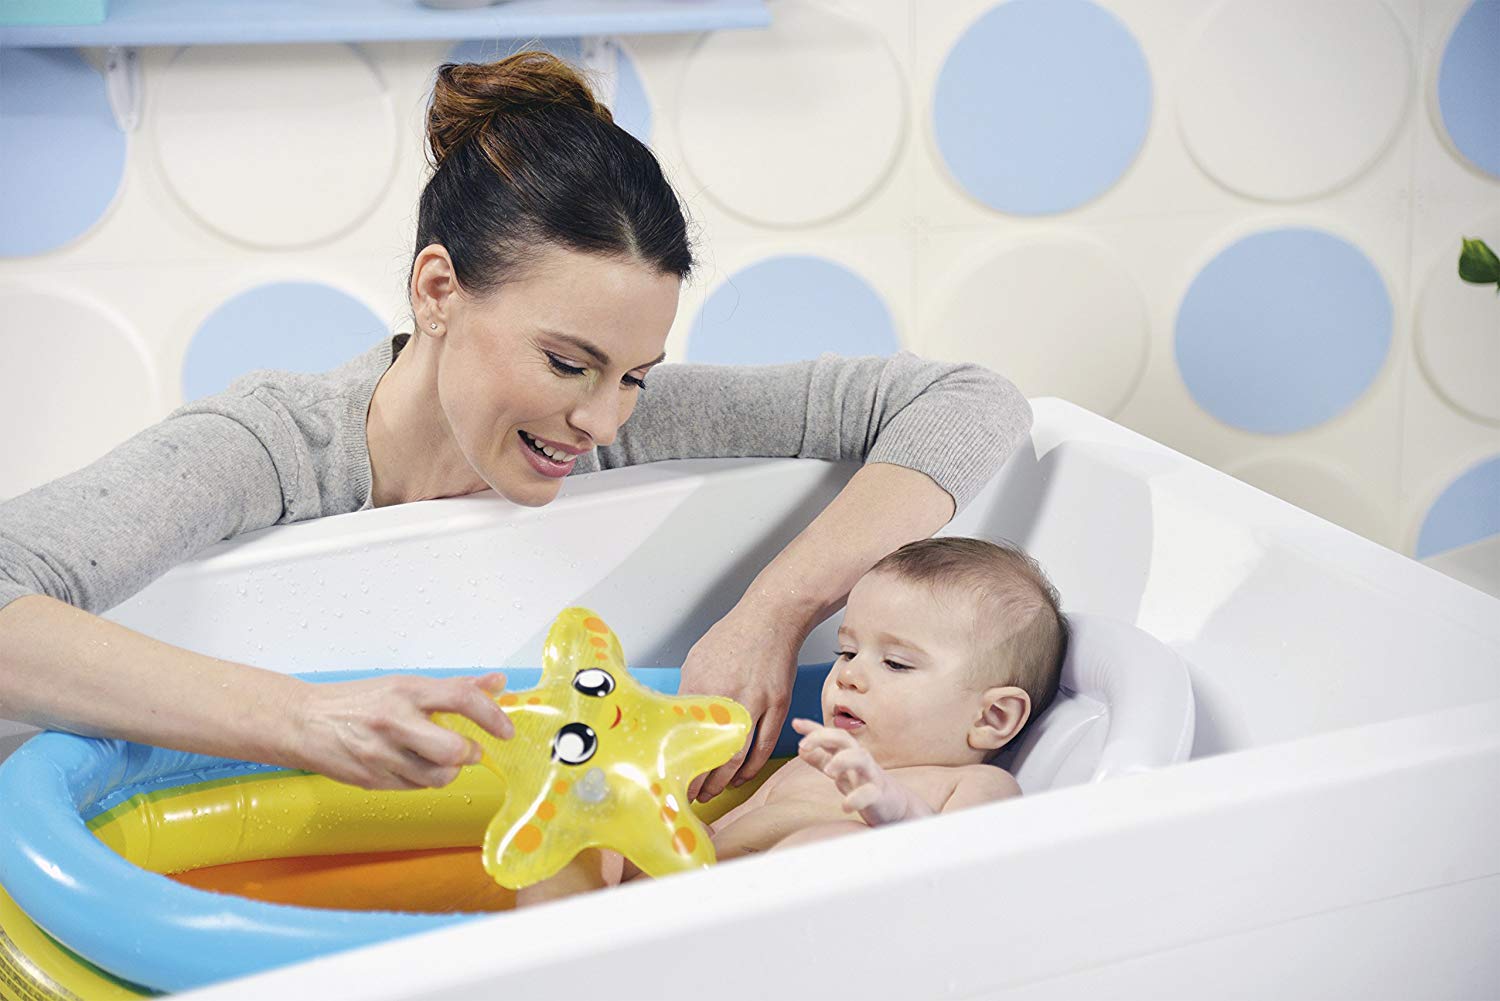 Squeaky Clean Inflatable Baby Bath (30" x 19" x 13"/76cm x 48cm x33cm)